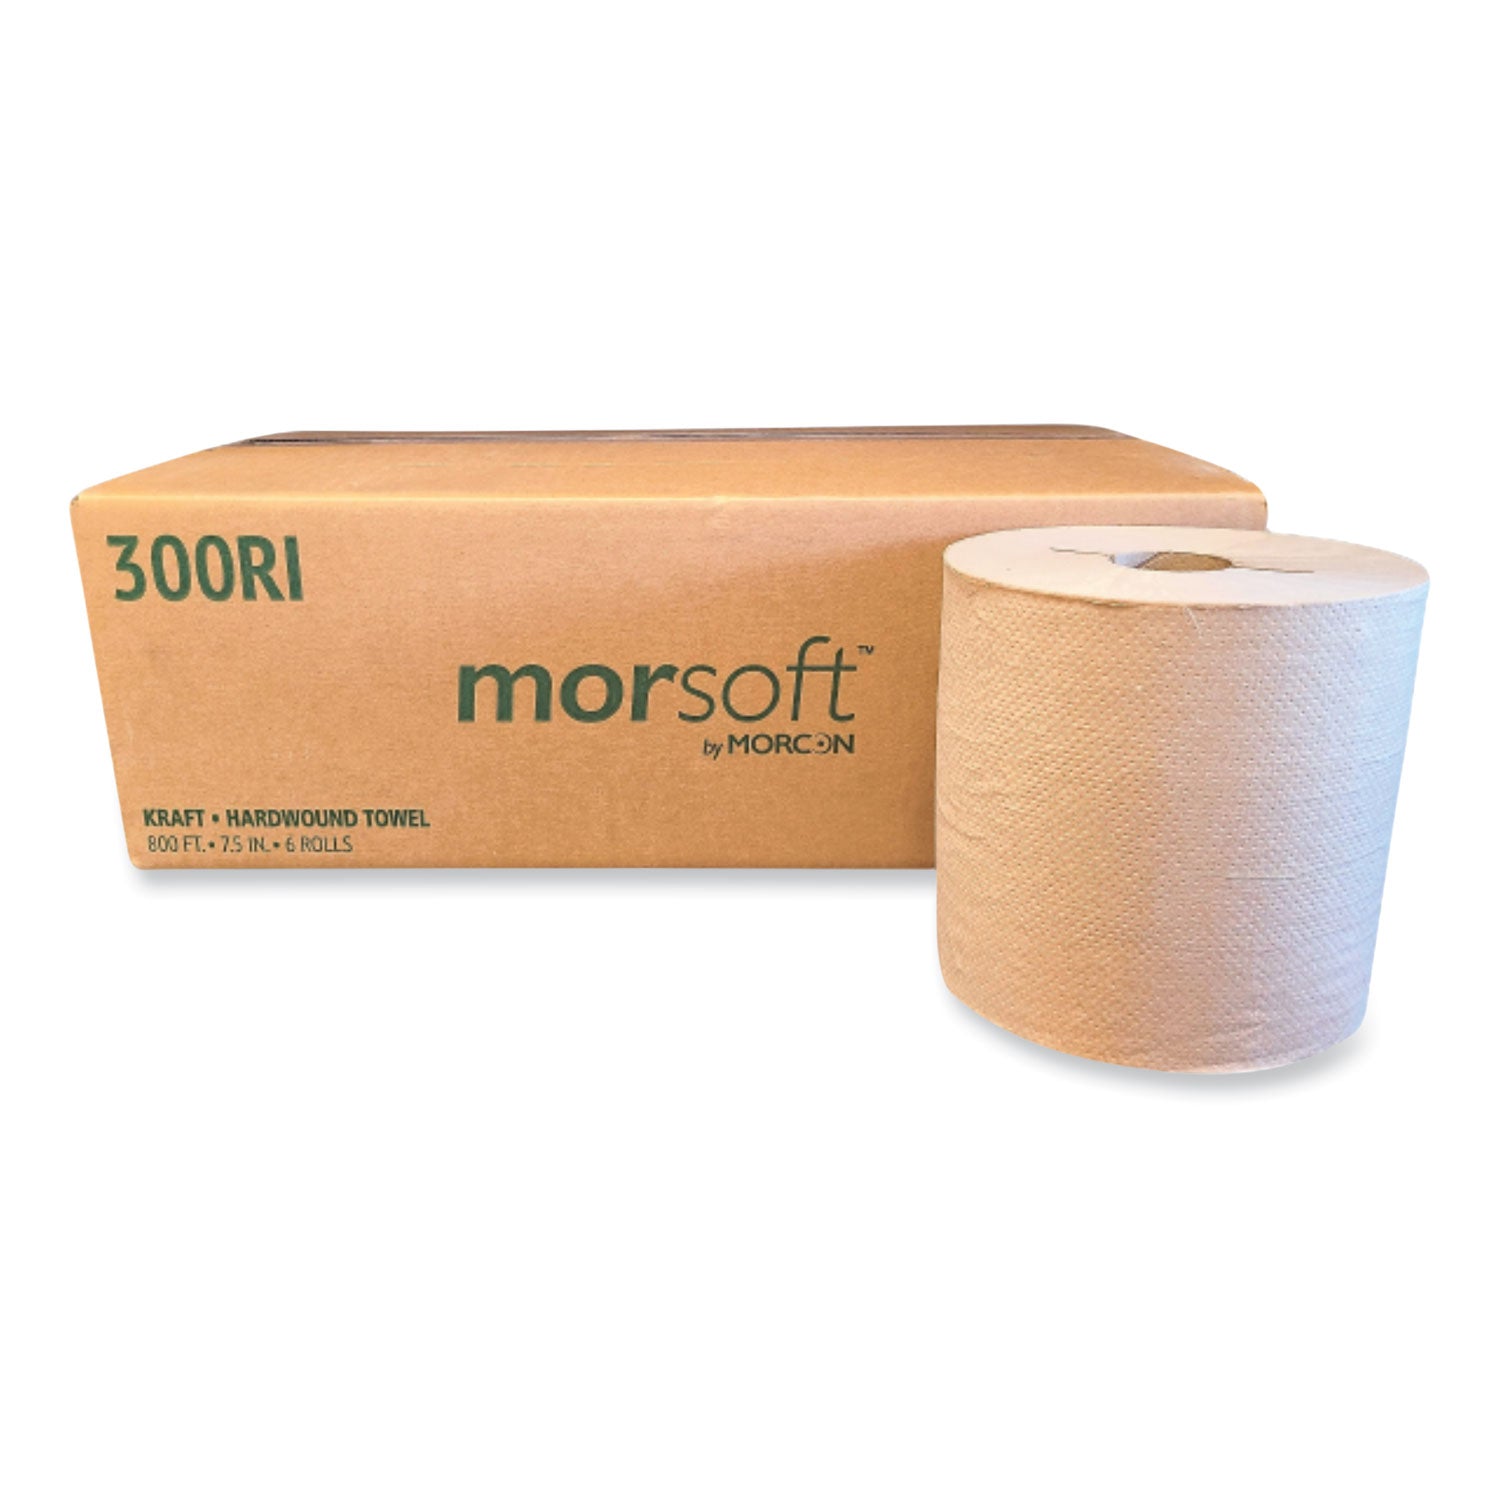 morsoft-controlled-towels-i-notch-1-ply-75-x-800-ft-kraft-6-rolls-carton_mor300ri - 5